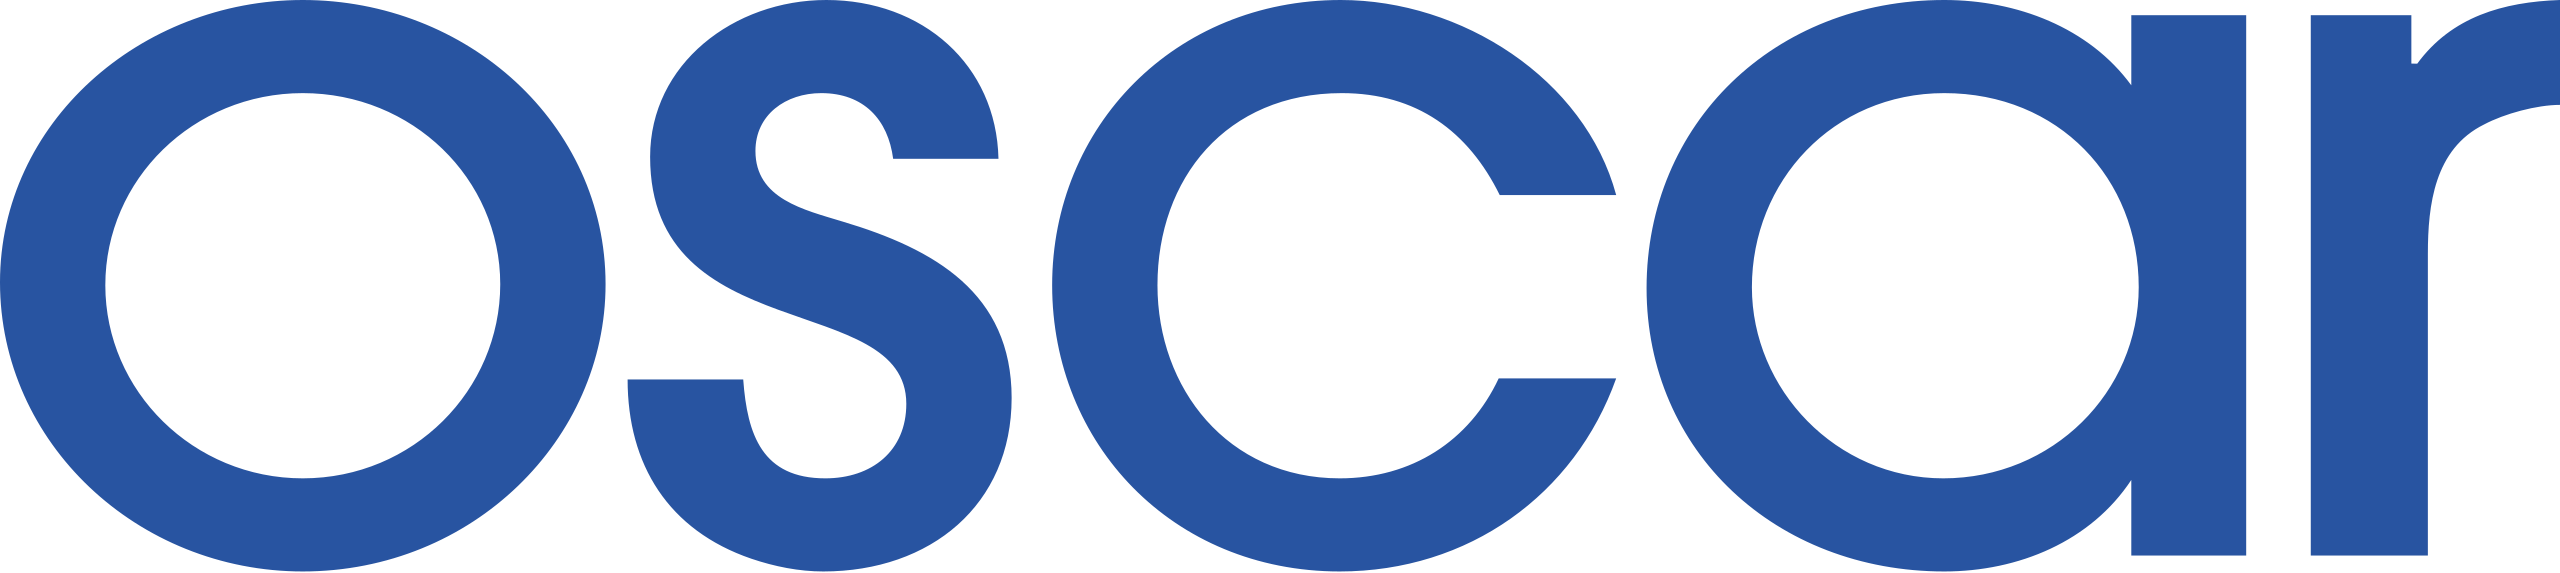 logo of Oscar Healt Insurance